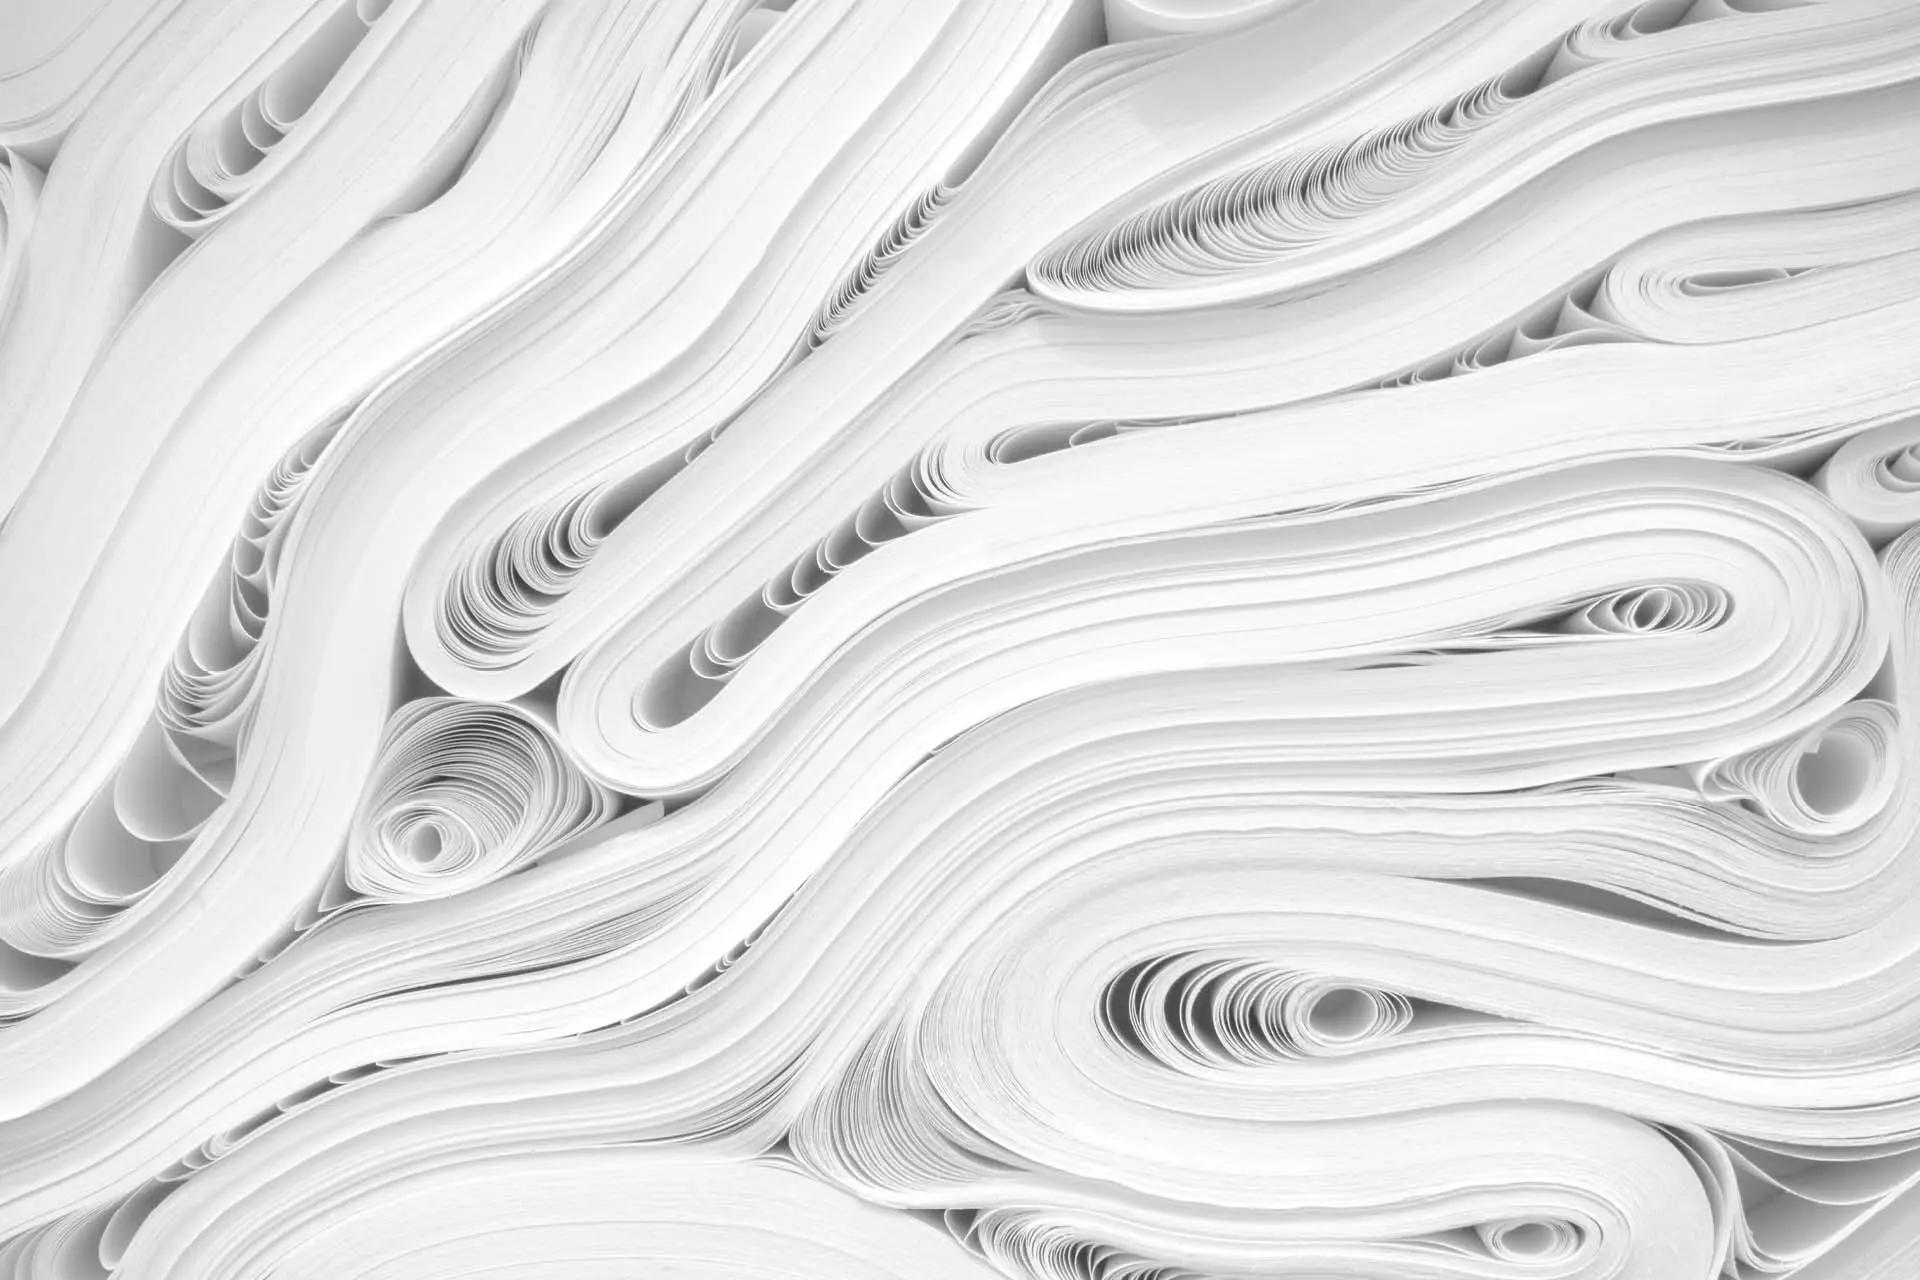 carbon footprint of paper